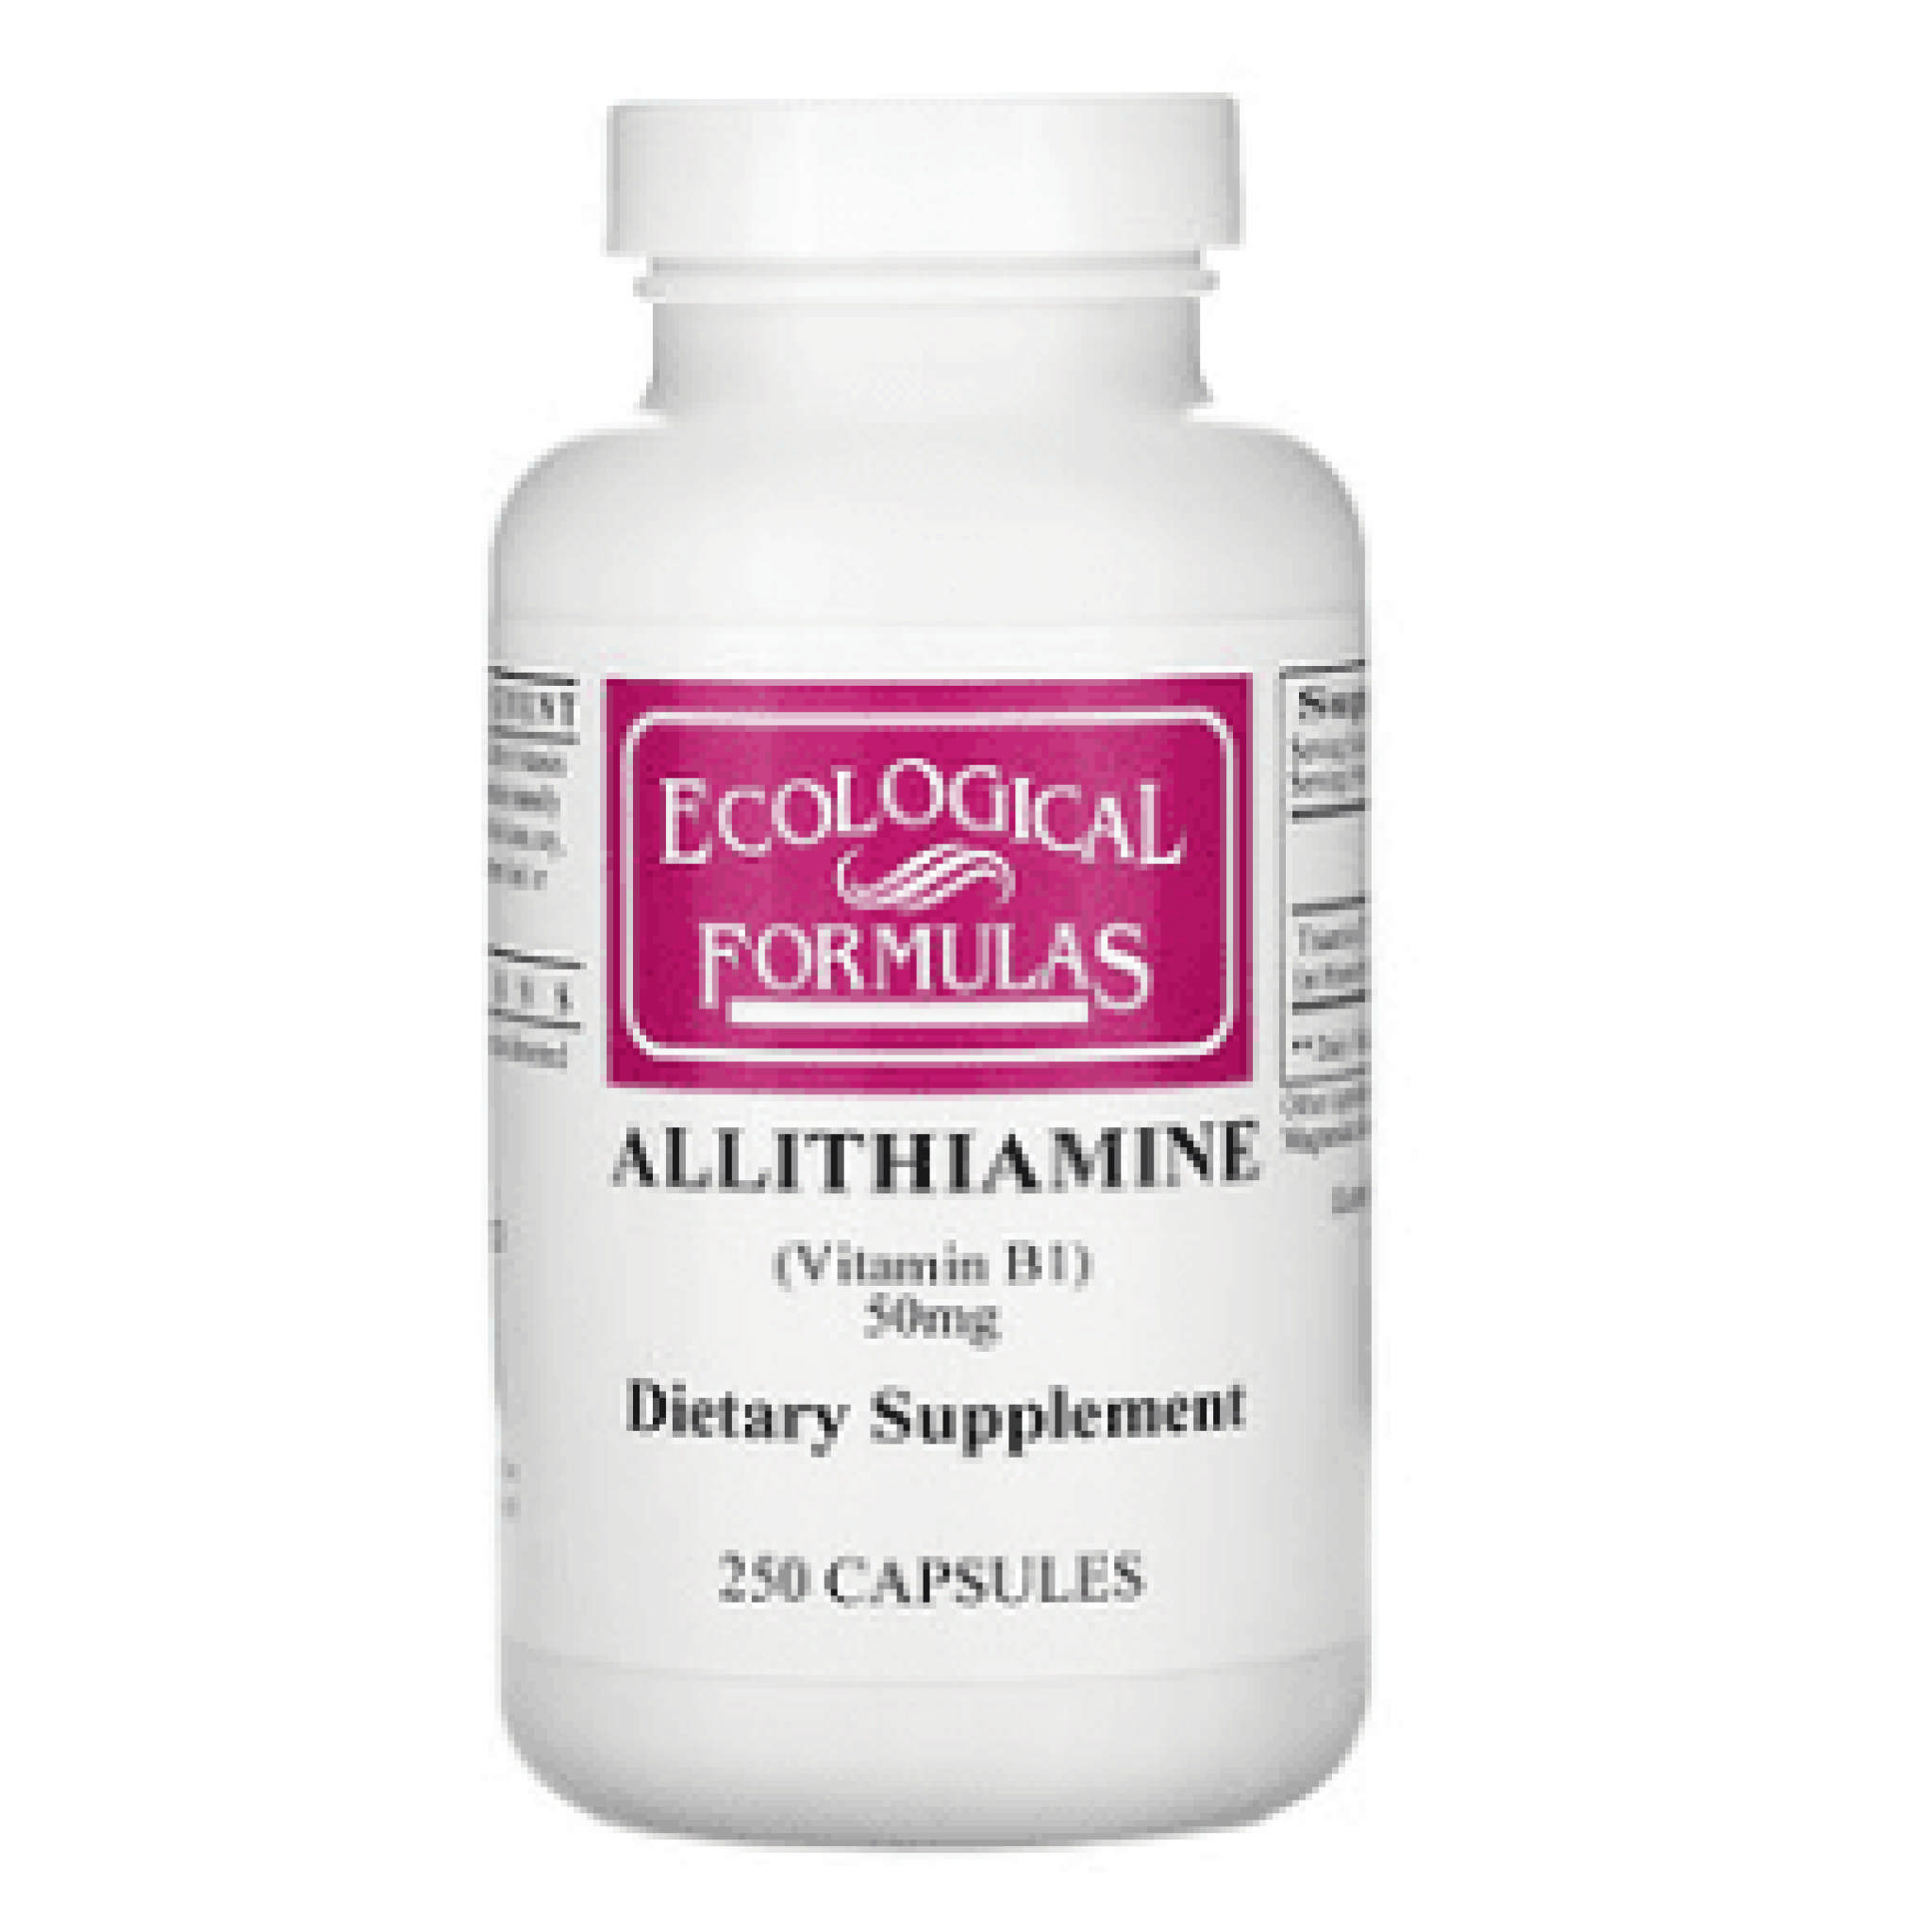 Ecological Formulas - Allithiamine 50